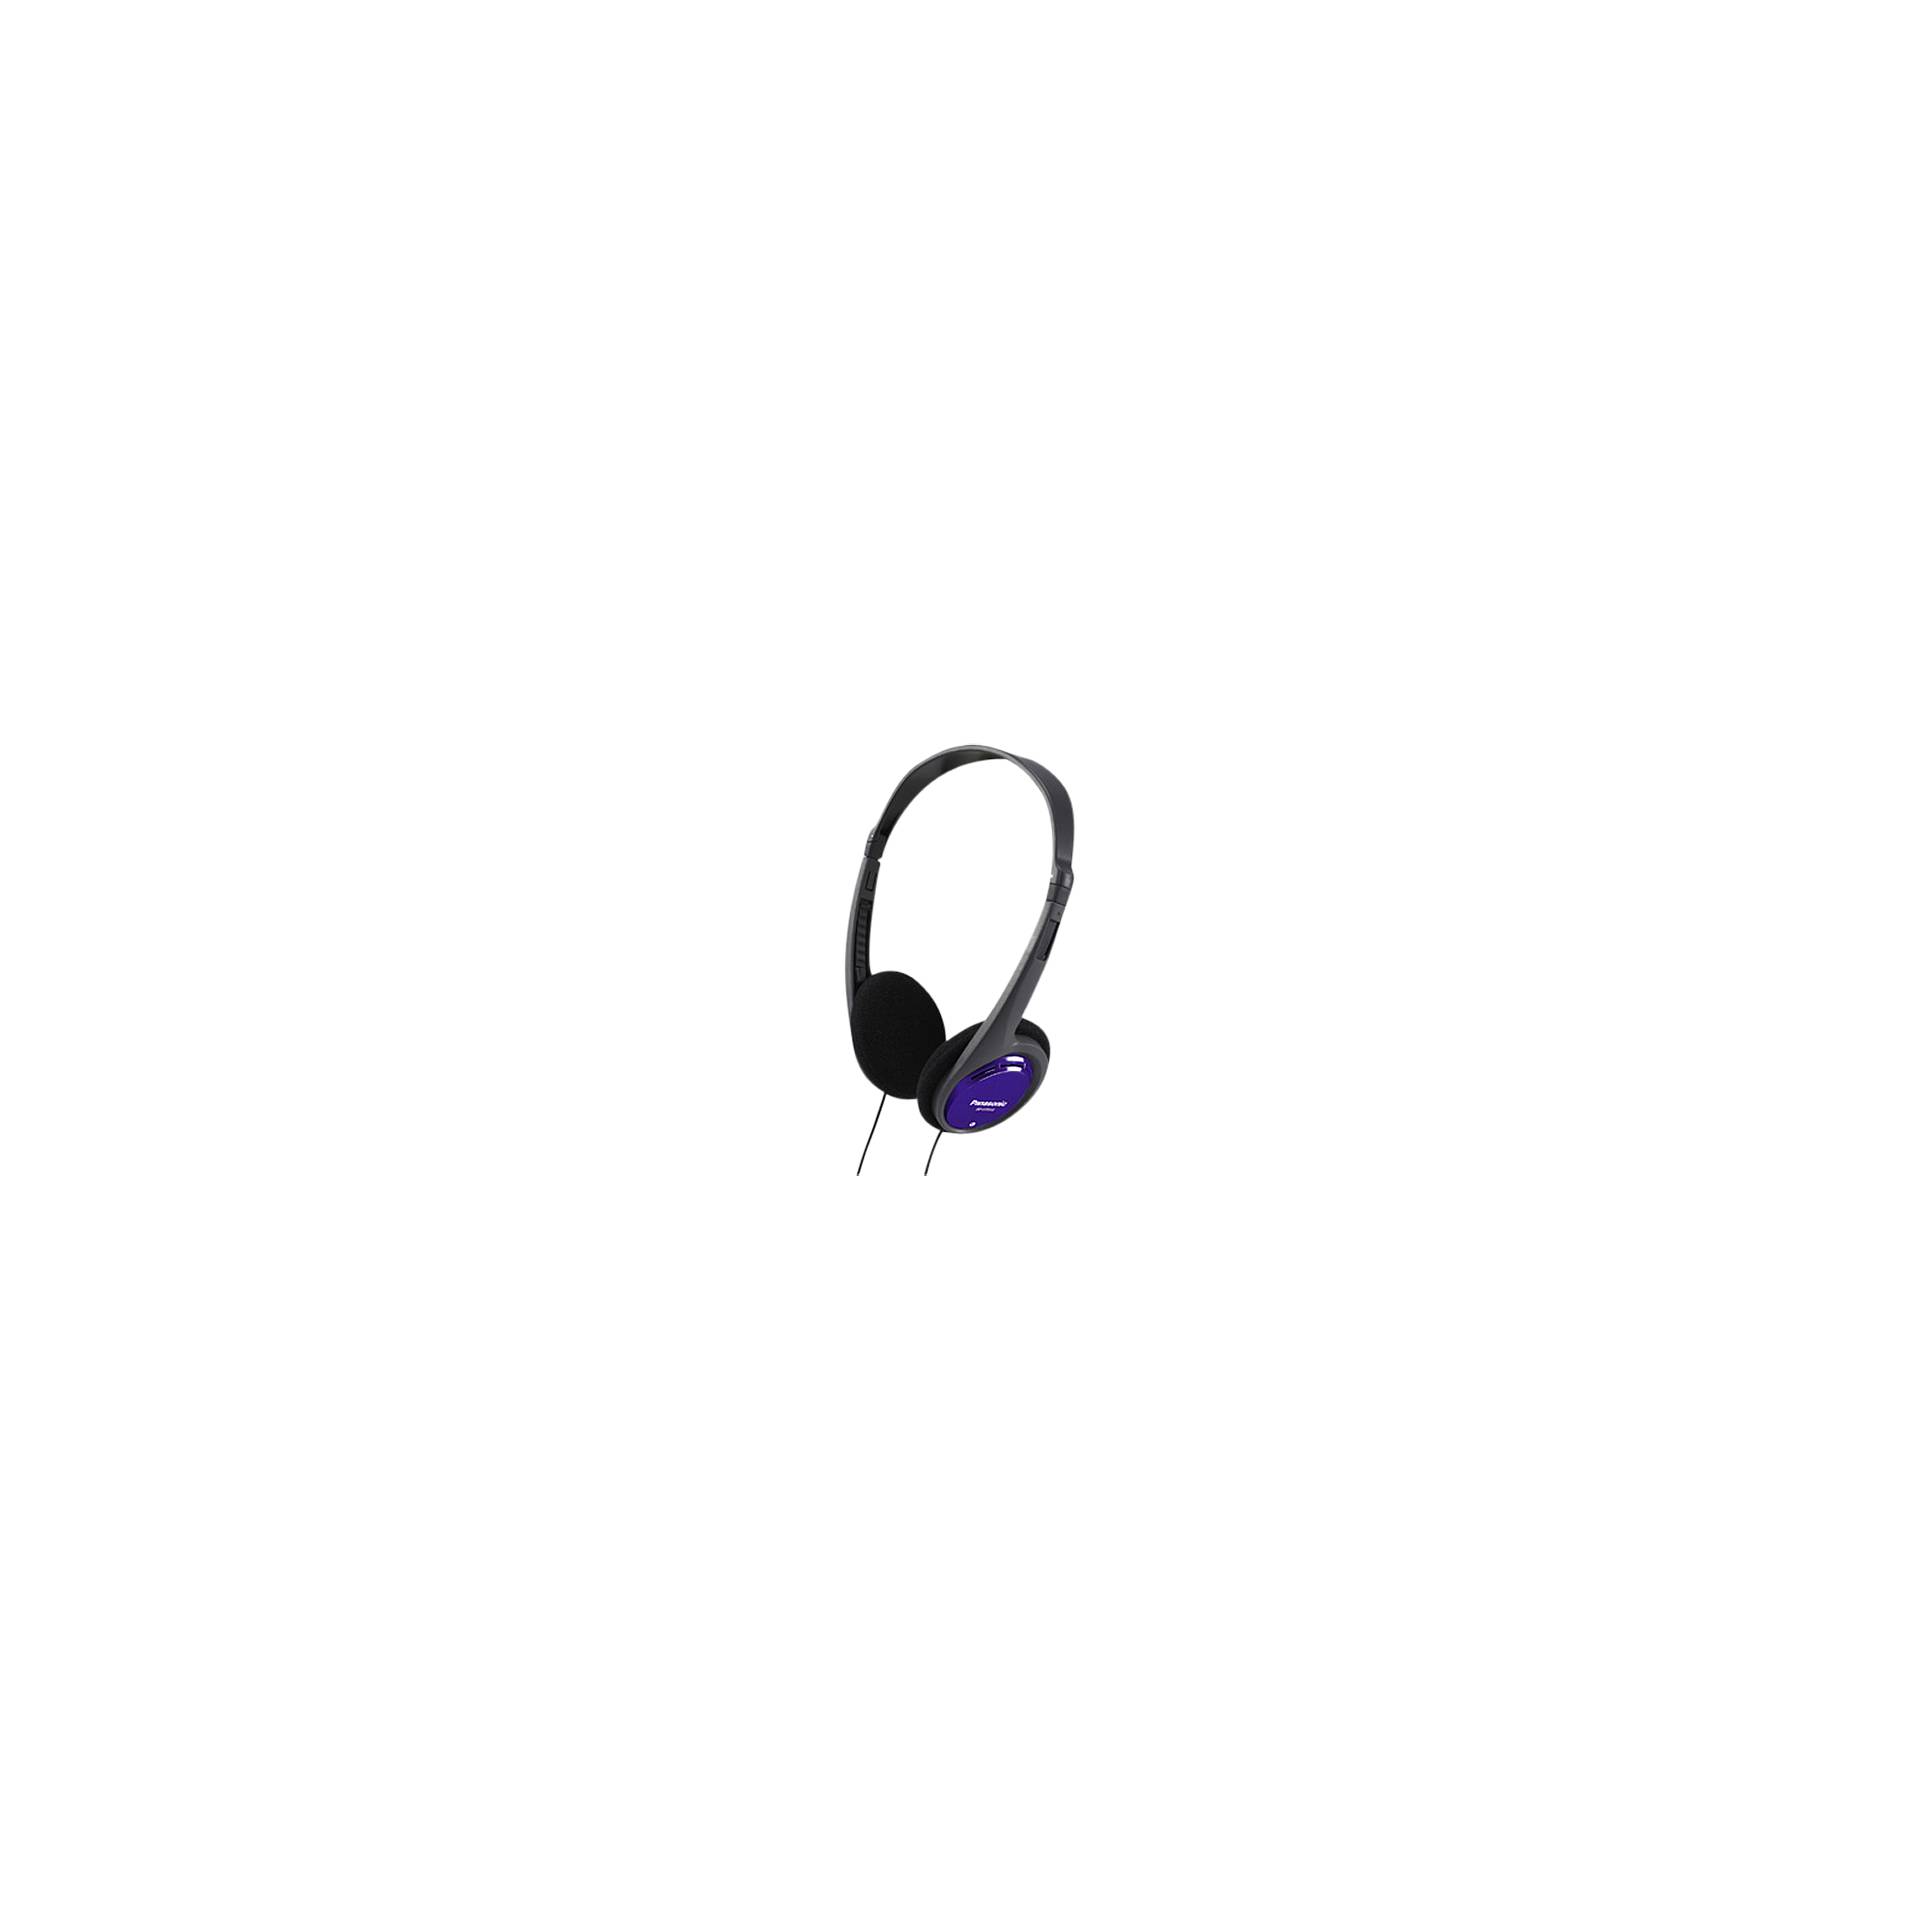 Panasonic -RP-HT010E-A Leichtbügel Kopfhörer blau -Panasonic Adapter/Cable